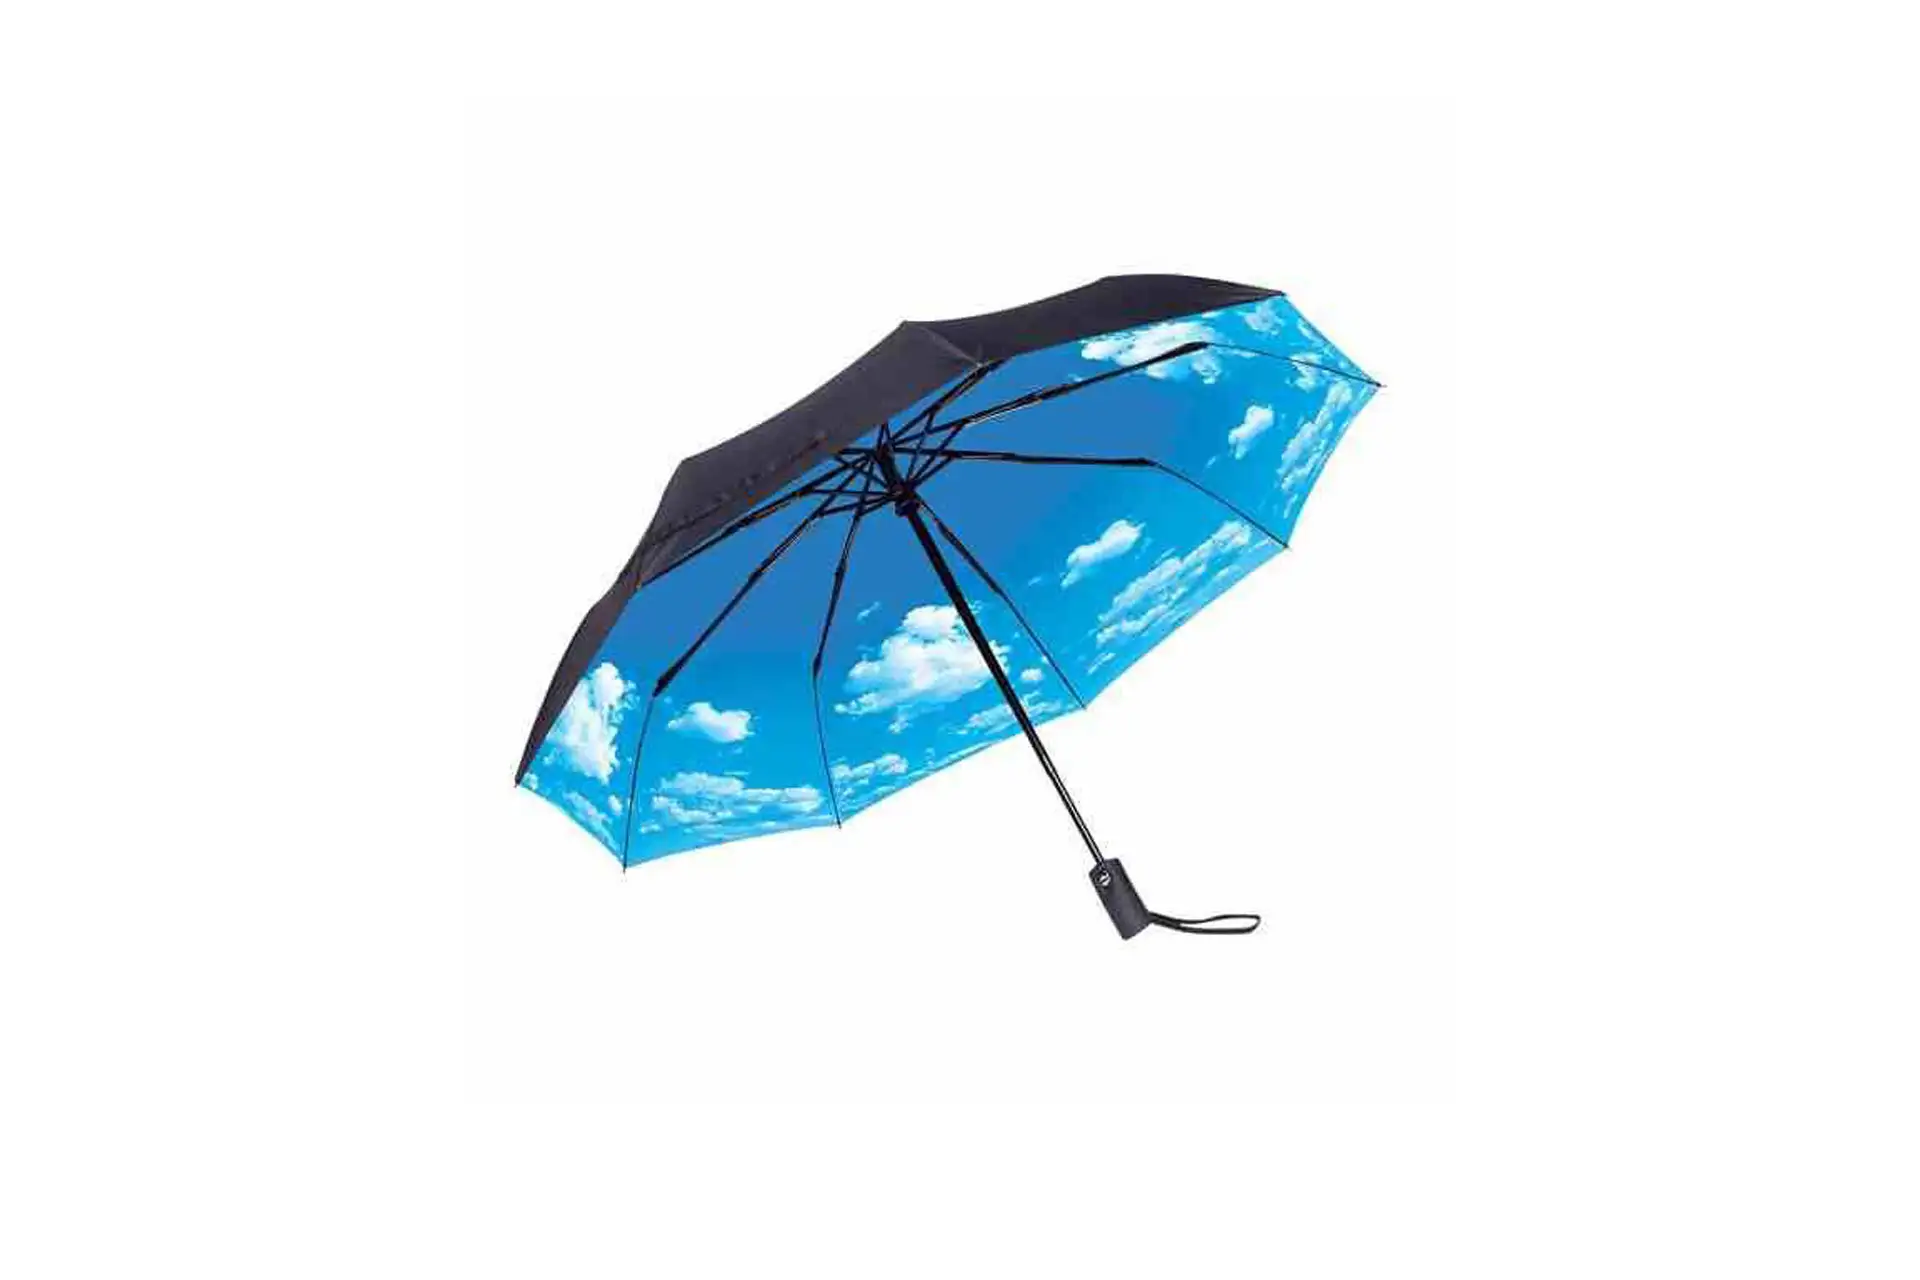 Umbrella; Courtesy of Amazon